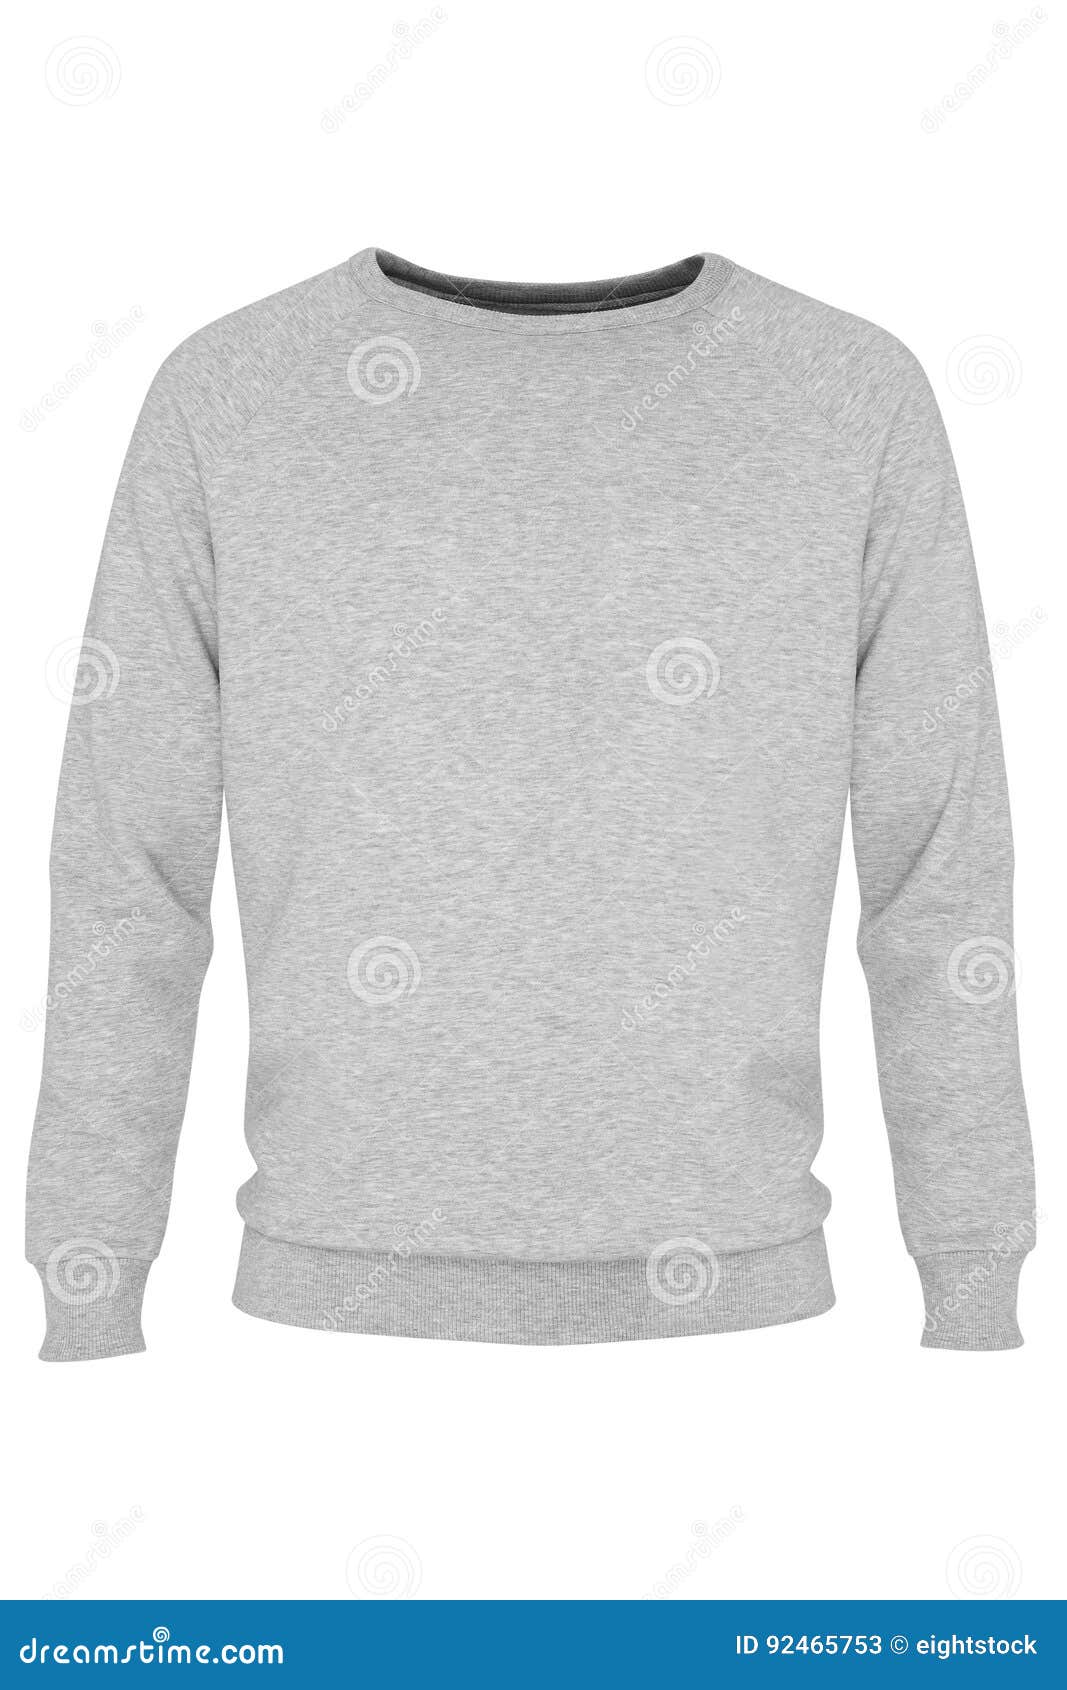 Gray long sleeve t-shirt stock image. Image of cuff, sweater - 92465753